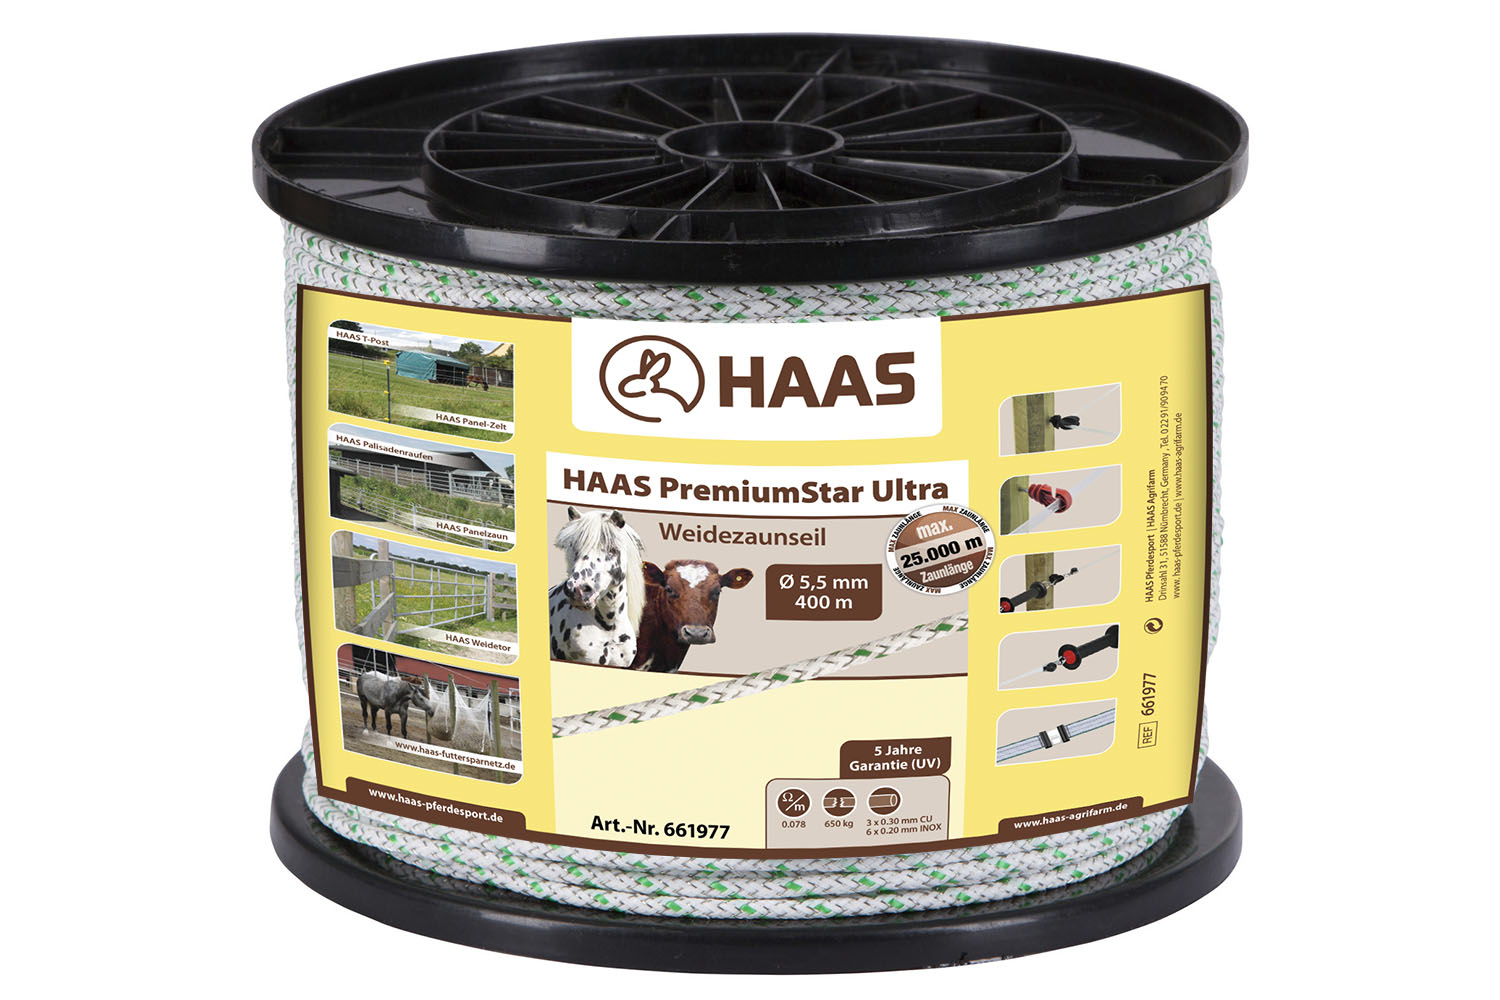 HAAS PremiumStar Ultra Weidezaunseil weiß/grün